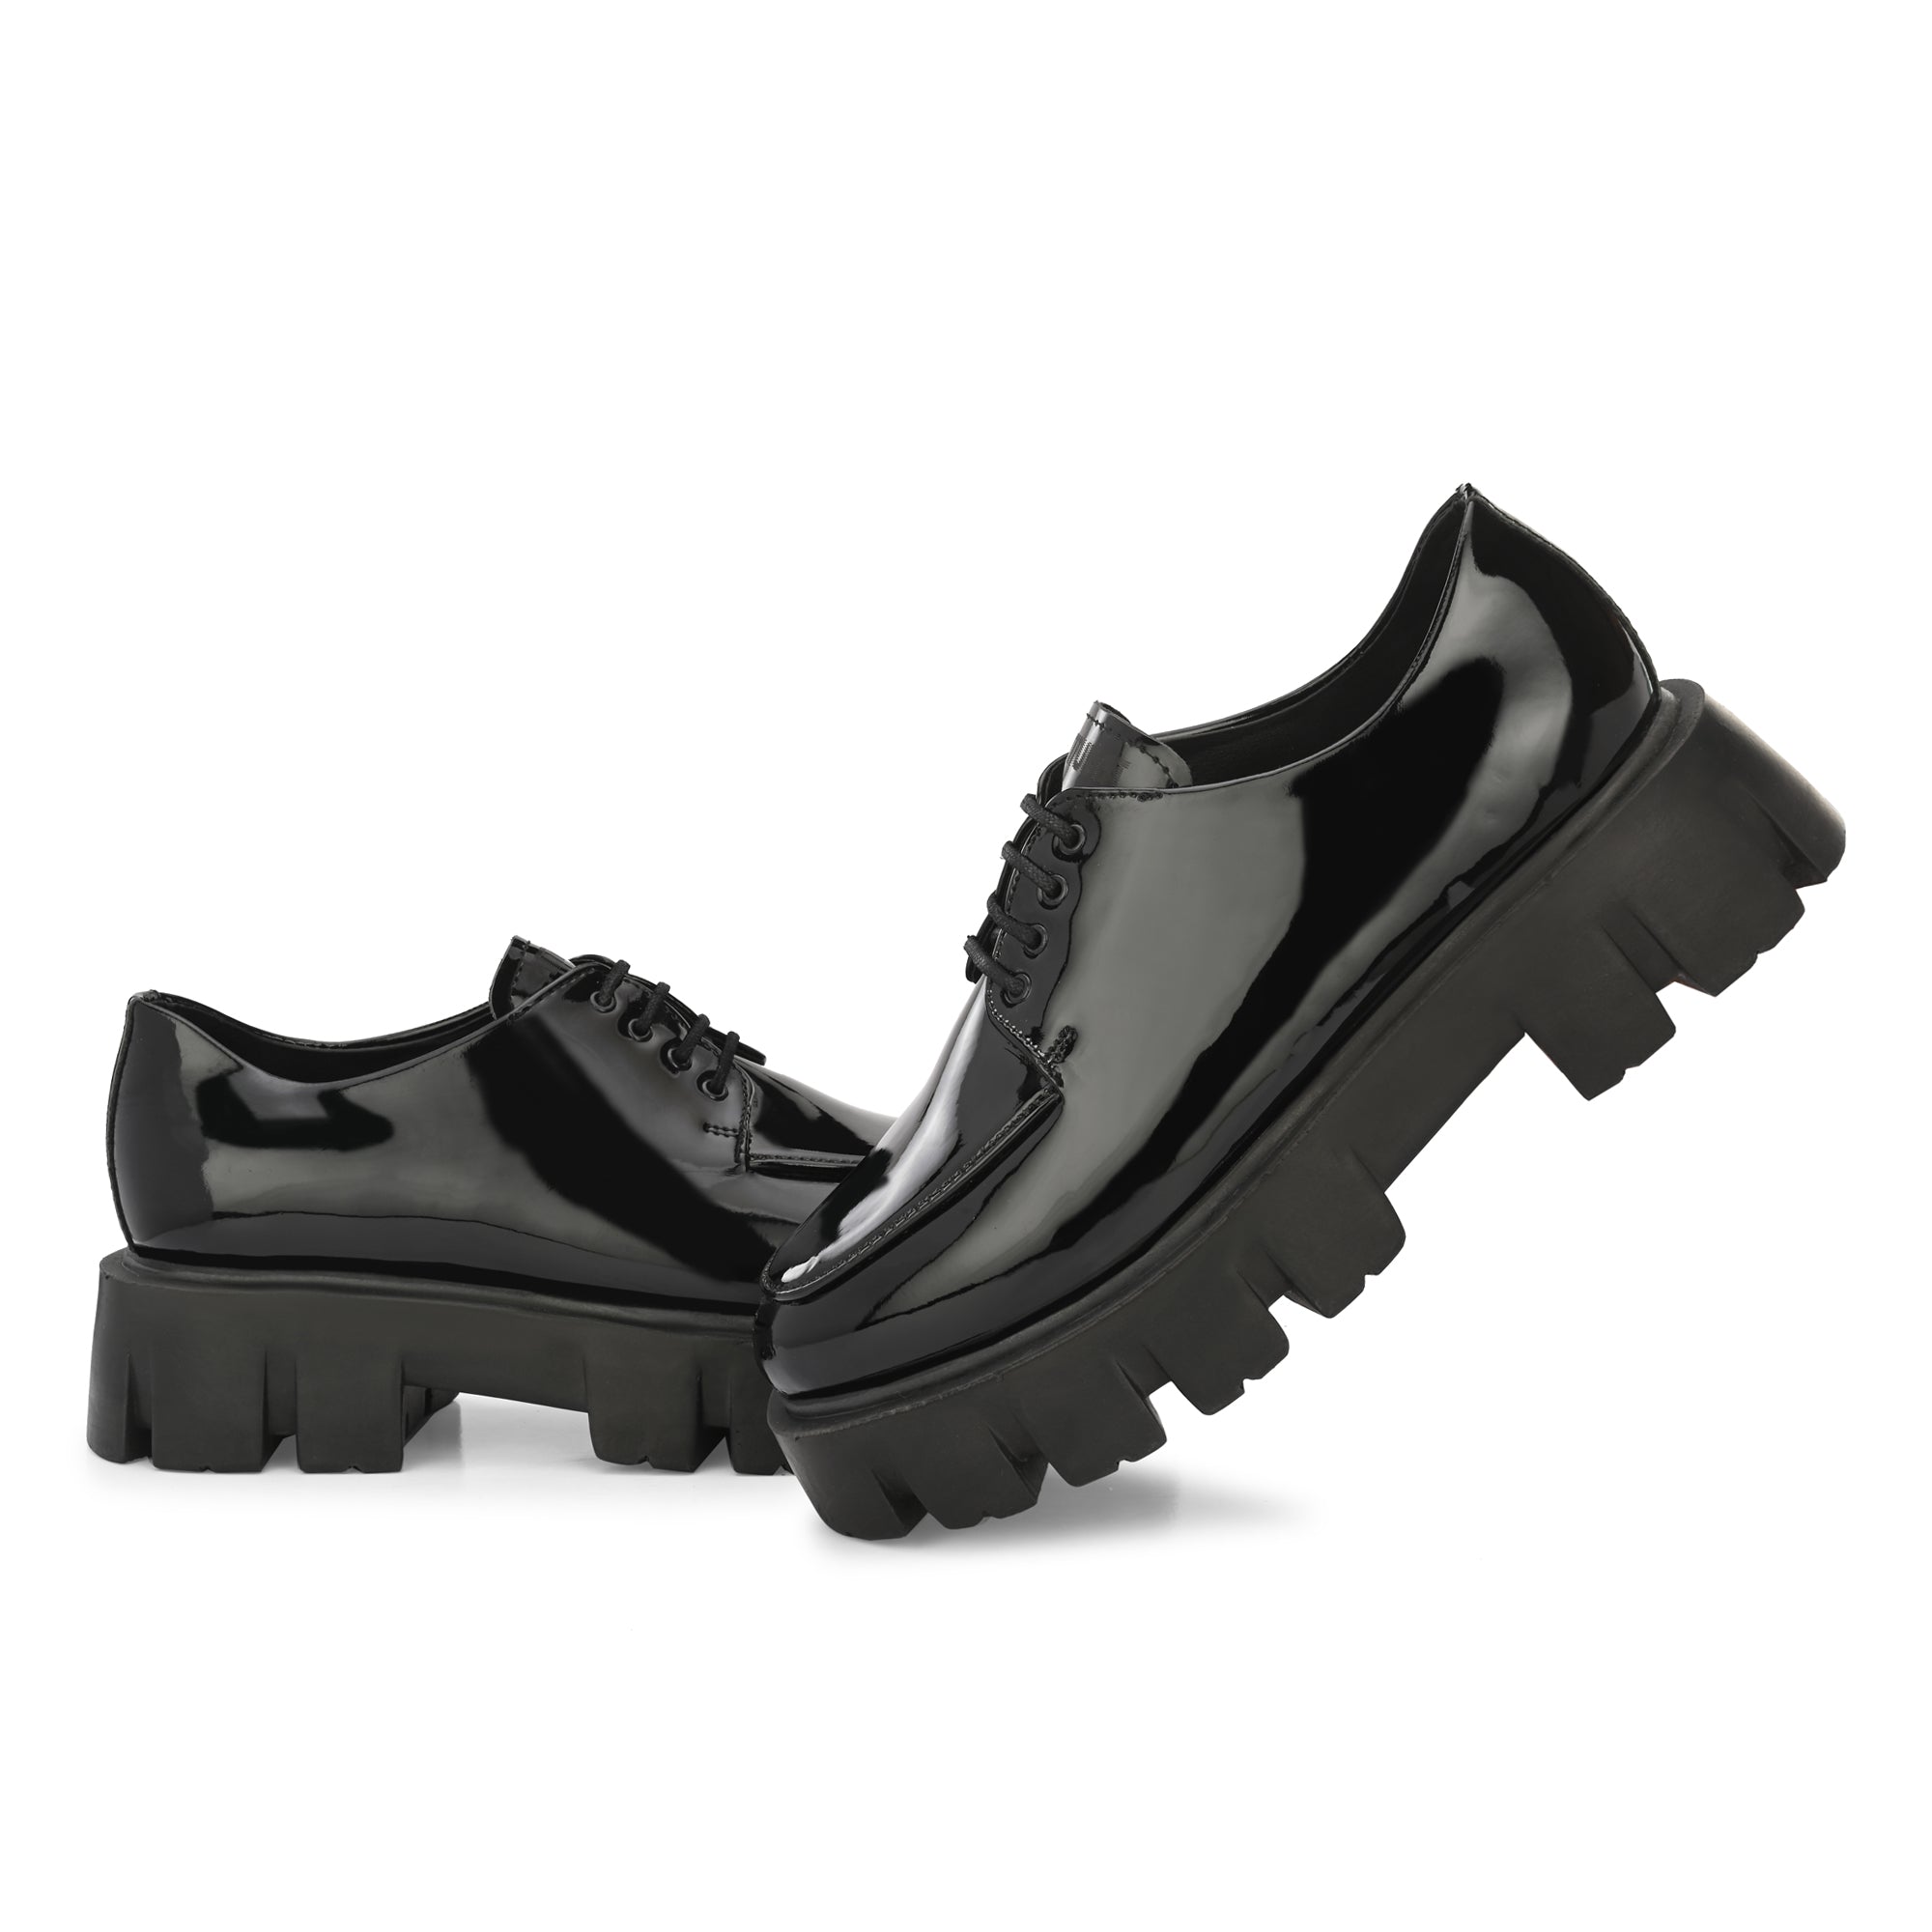 Attitudist : Buy Men's Footwear Online